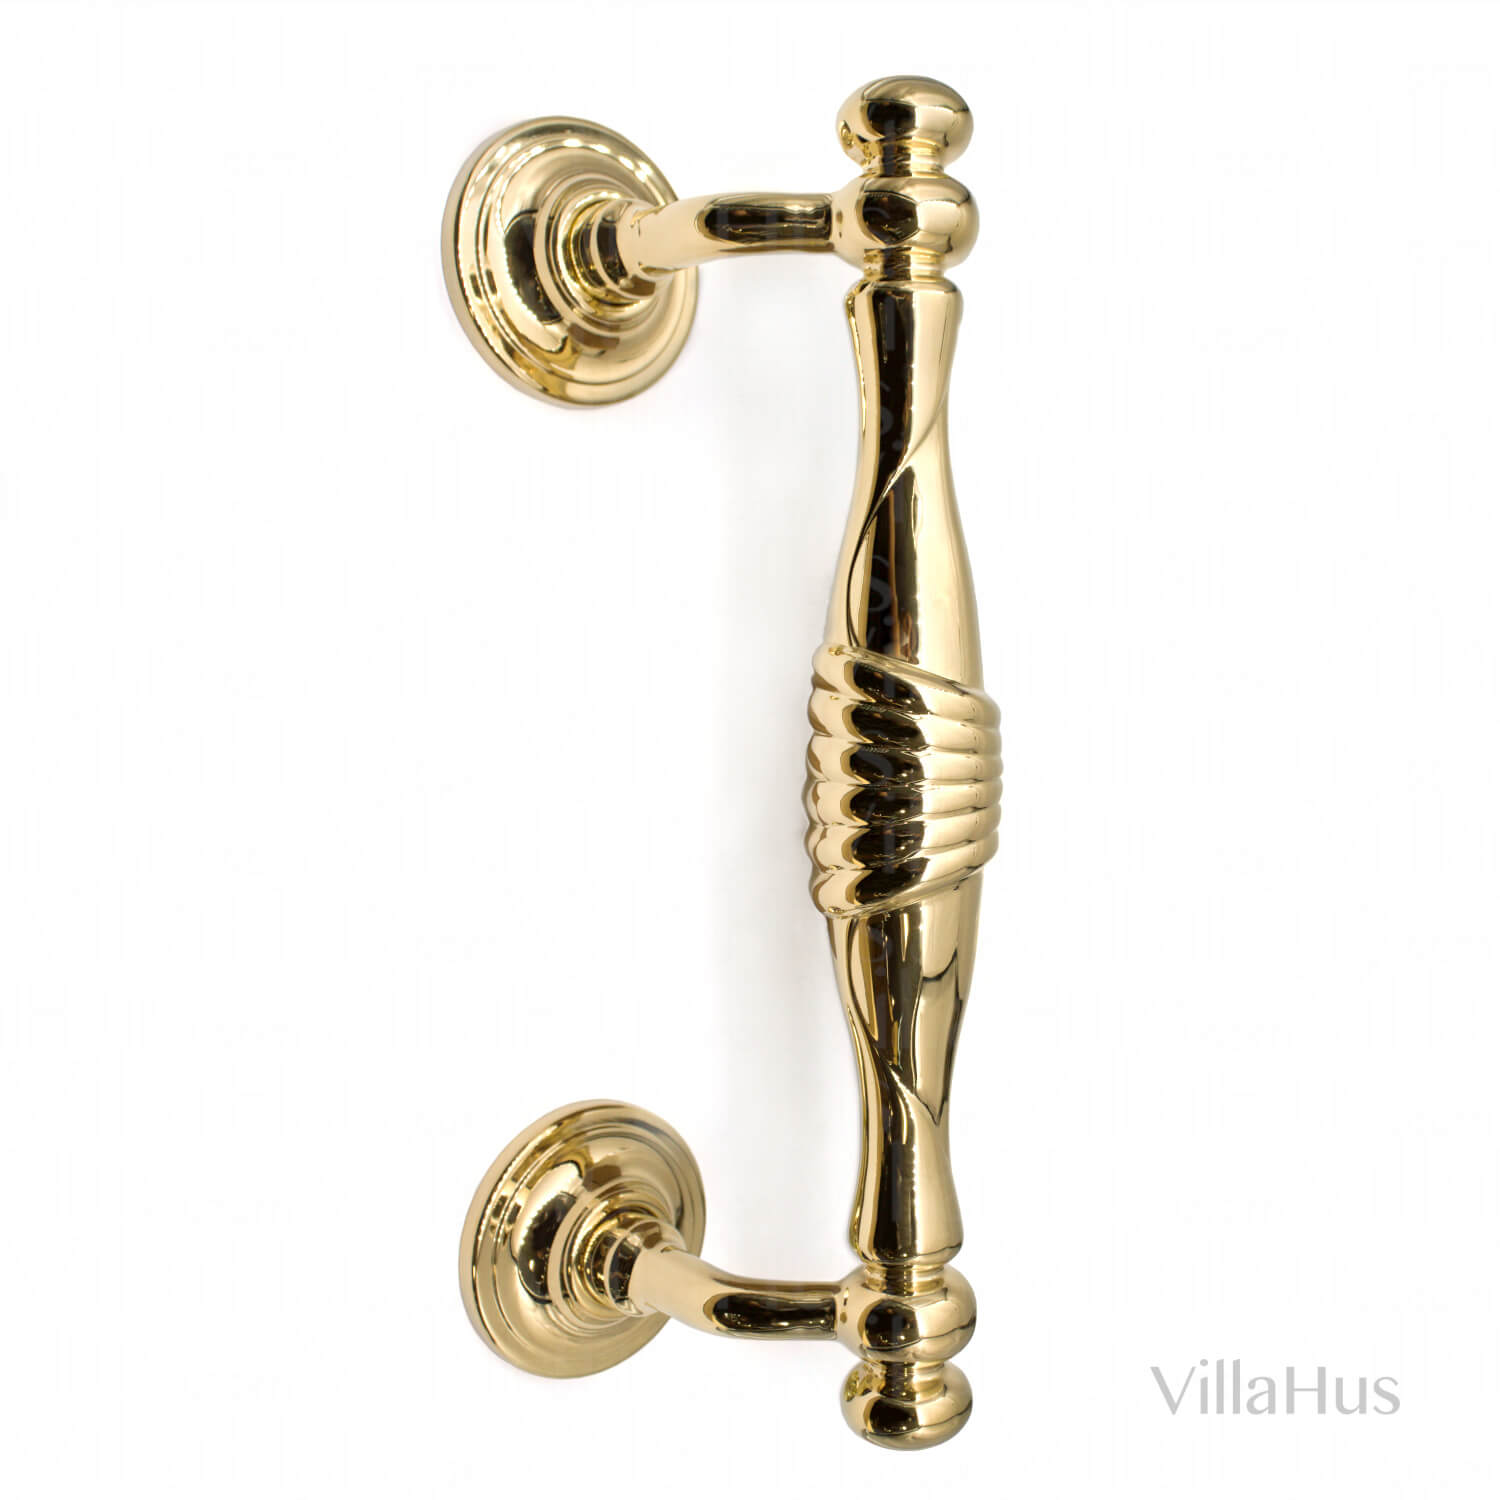 https://sw9762.sfstatic.io/upload_dir/shop/Enrico-Cassina/Doerhank-poleret-messing-uden-lak-070523Q-door-handle-polished-unlacquered-brass-villahus.jpg